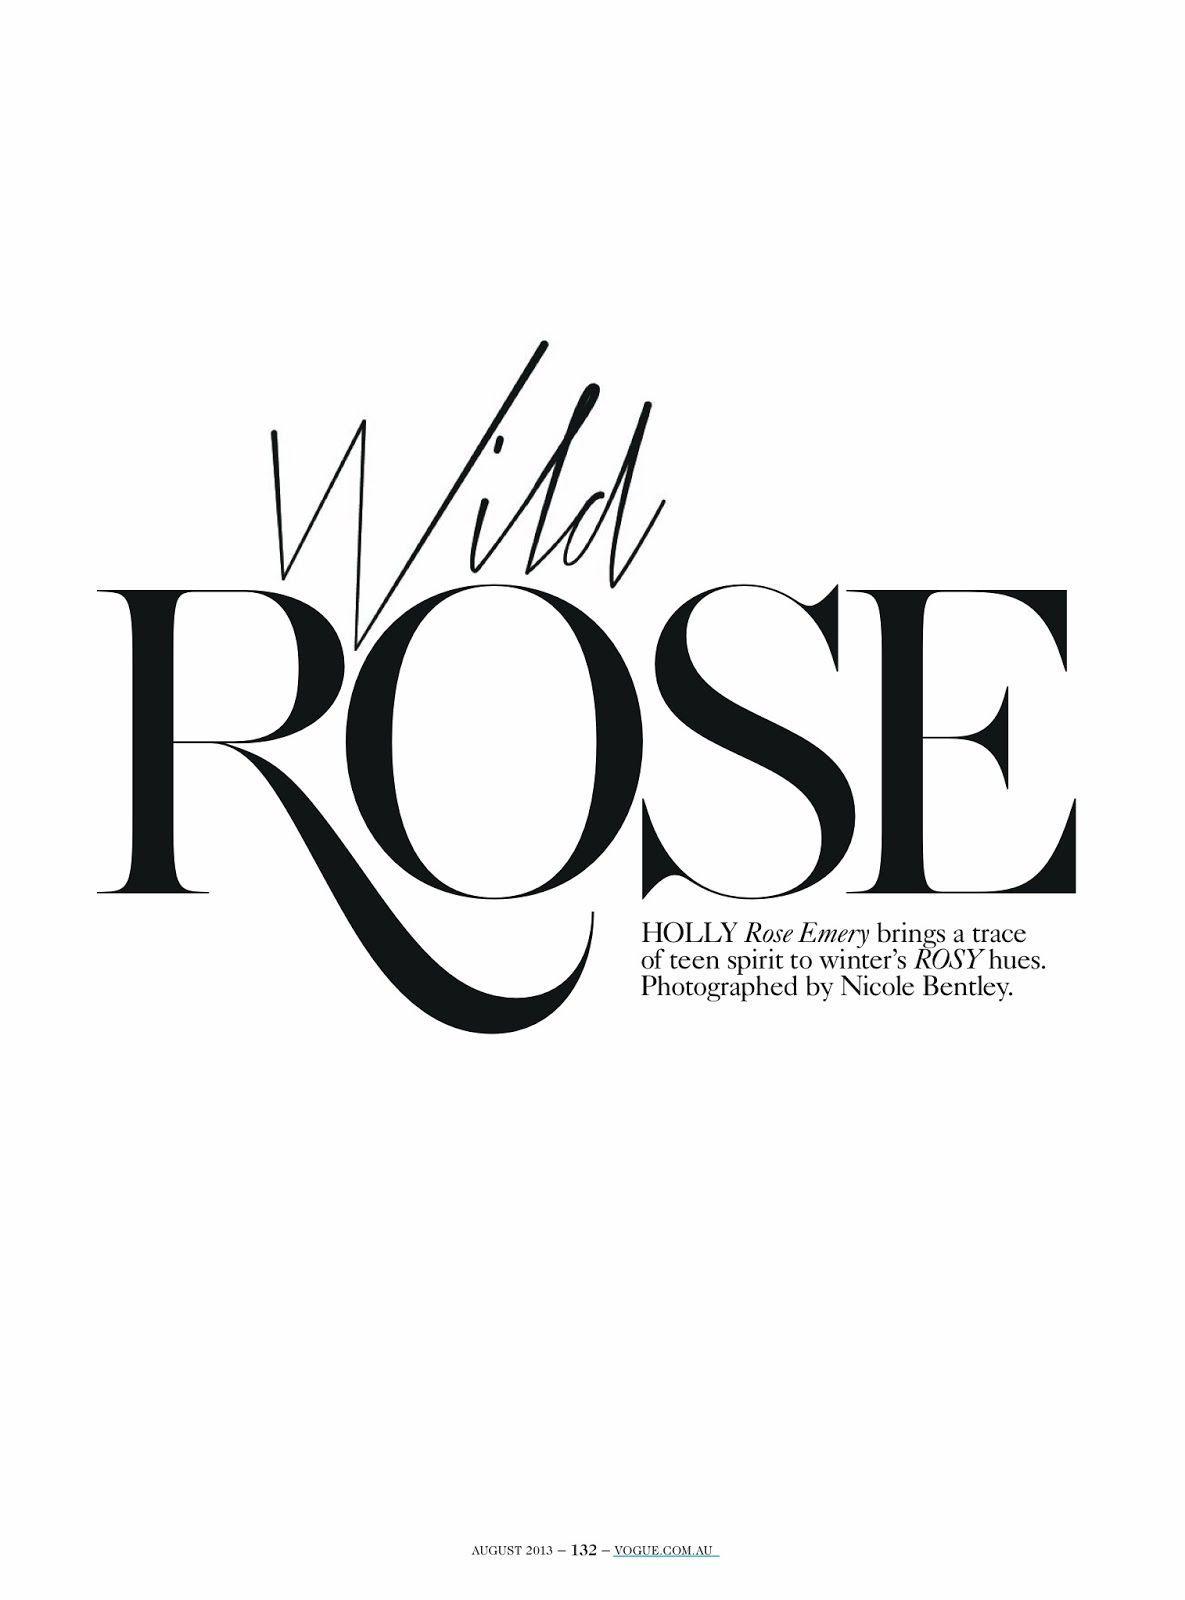 Vogue.com Logo - Vogue Wild Rose Ad Campaign // Fonts: Xtreem Thin, Didot, Times